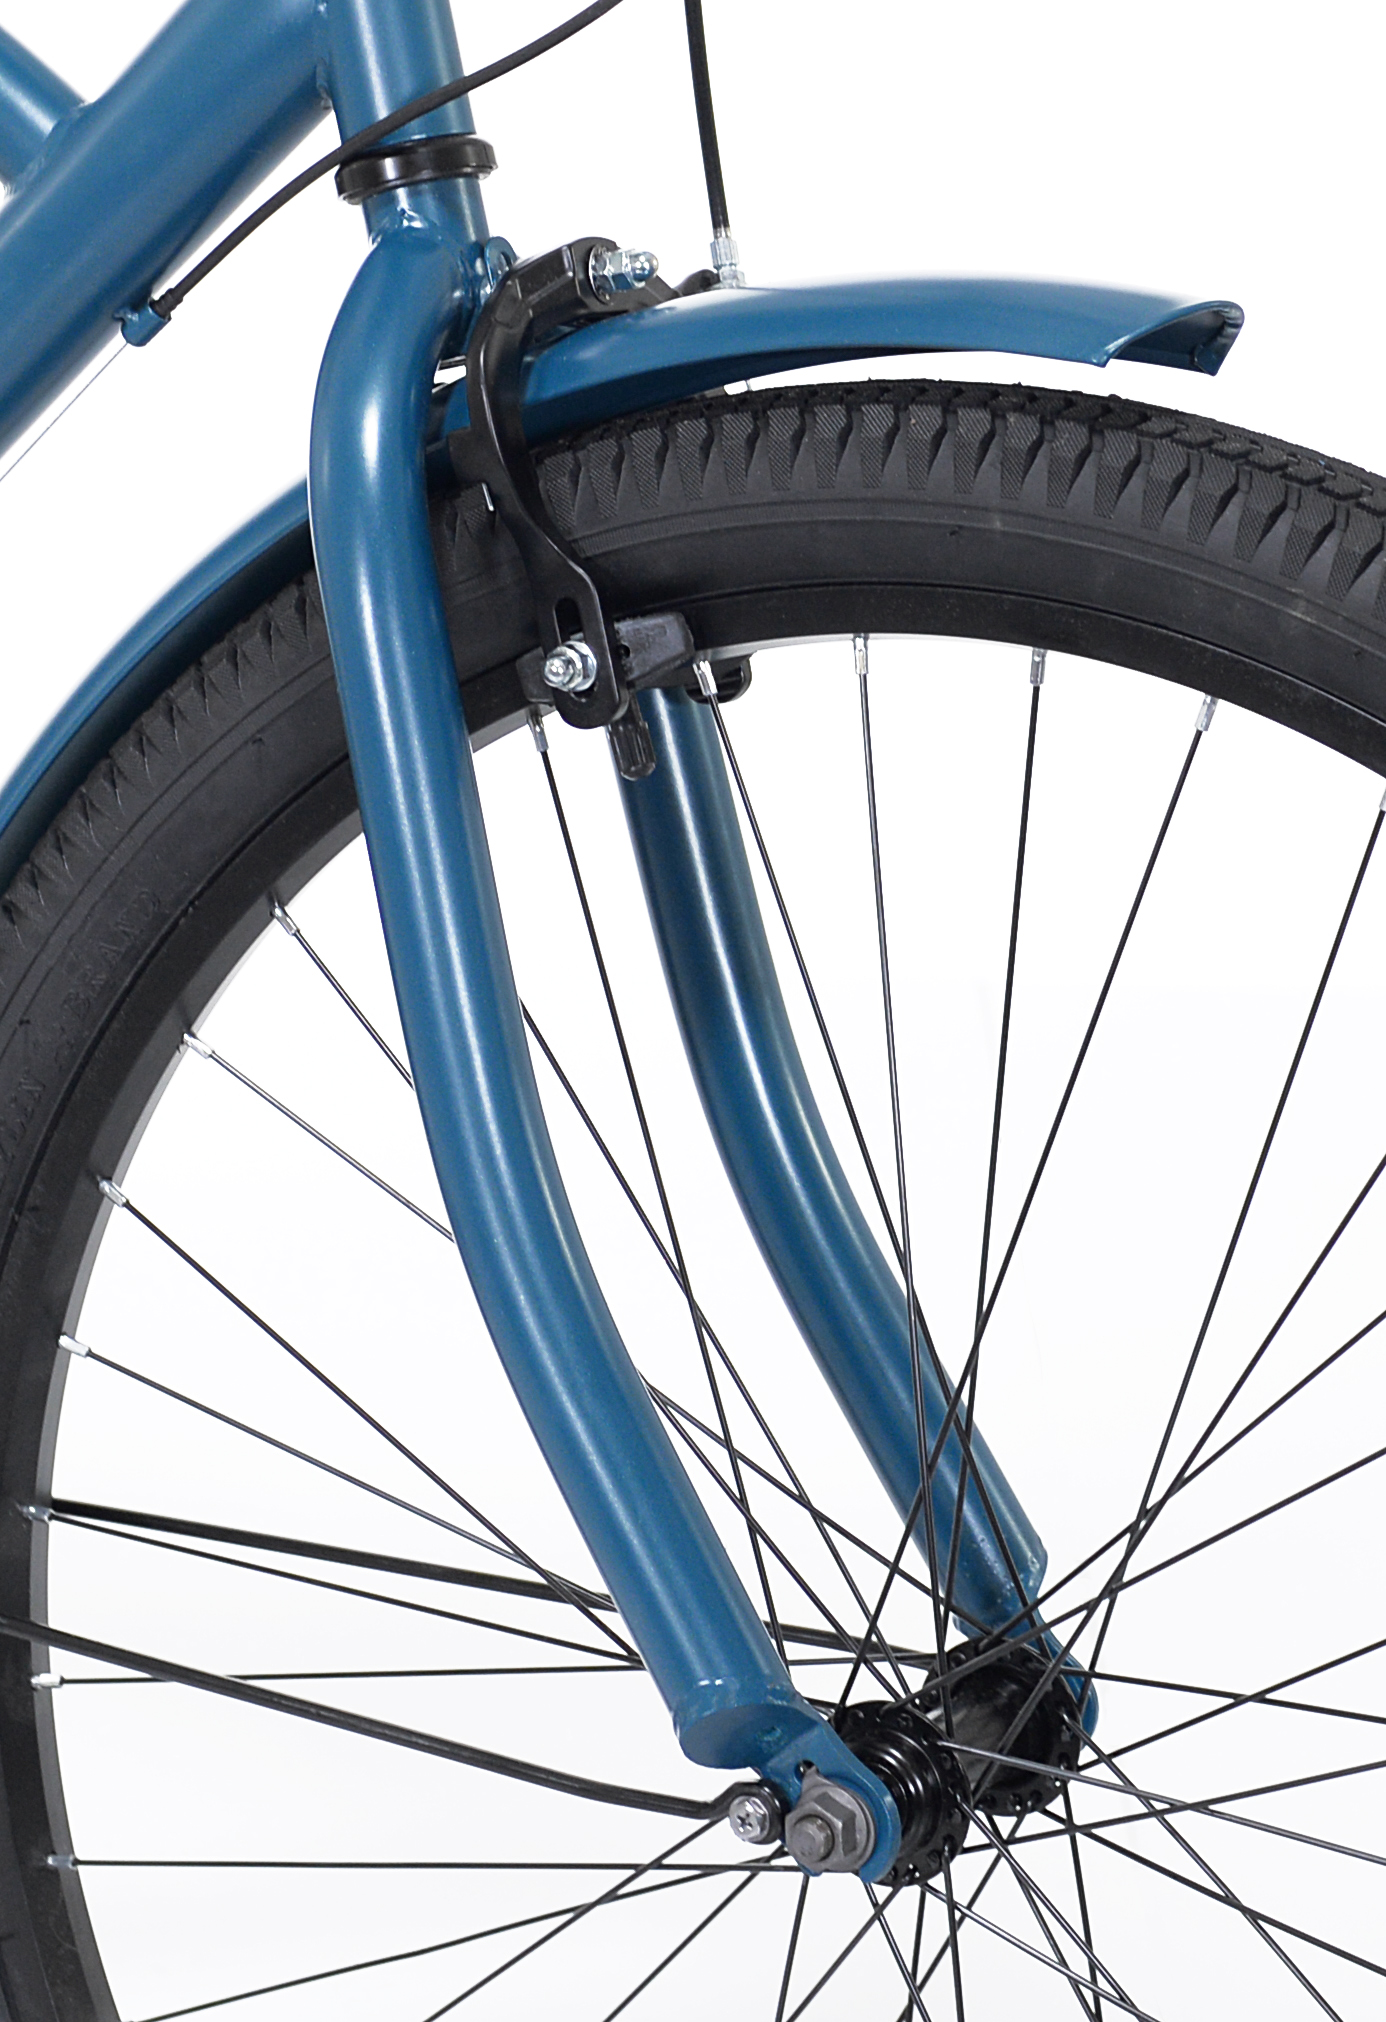 Kent Bicycle 26-inch Bayside Men's Cruiser Bicycle, Blue - image 3 of 8